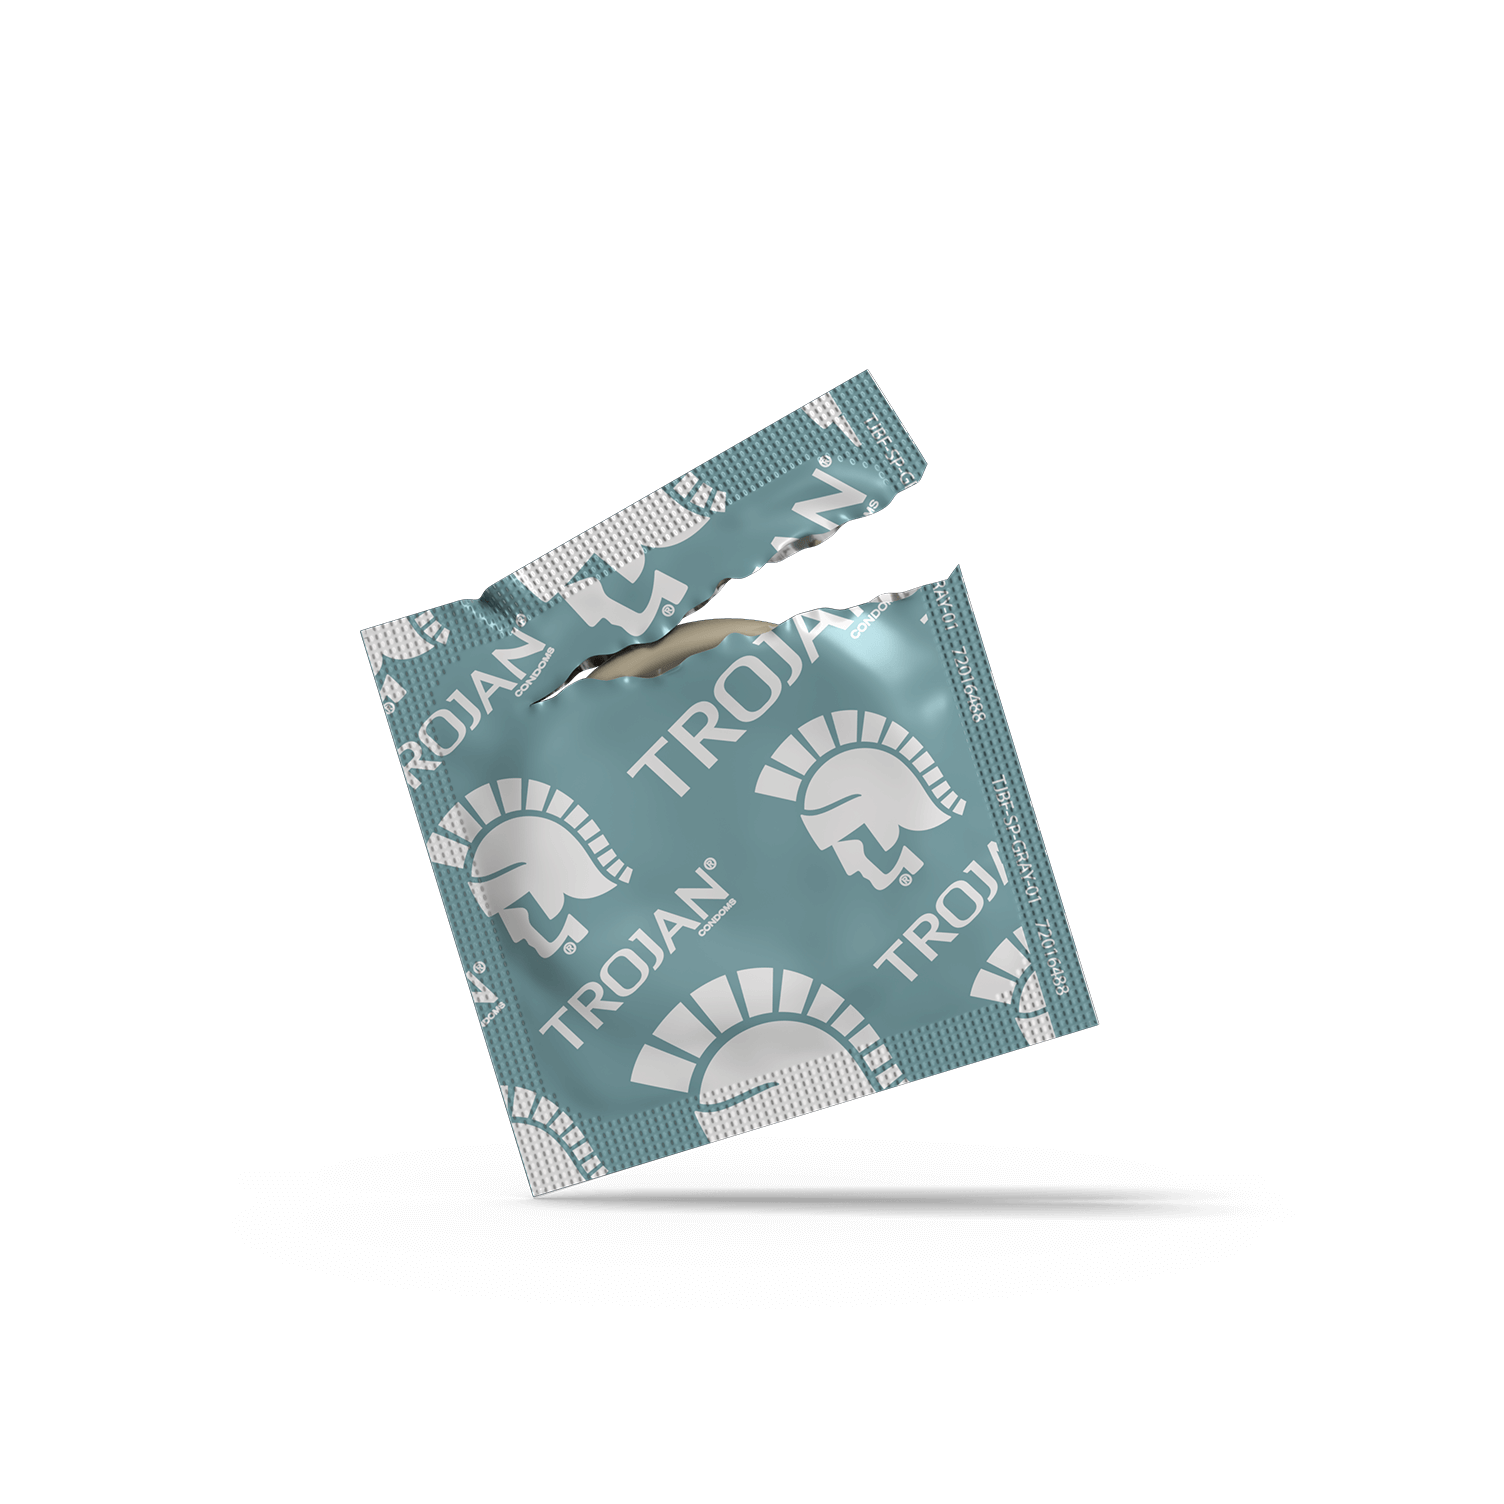 Trojan Ultra Thin Lubricated Condom wrapper.